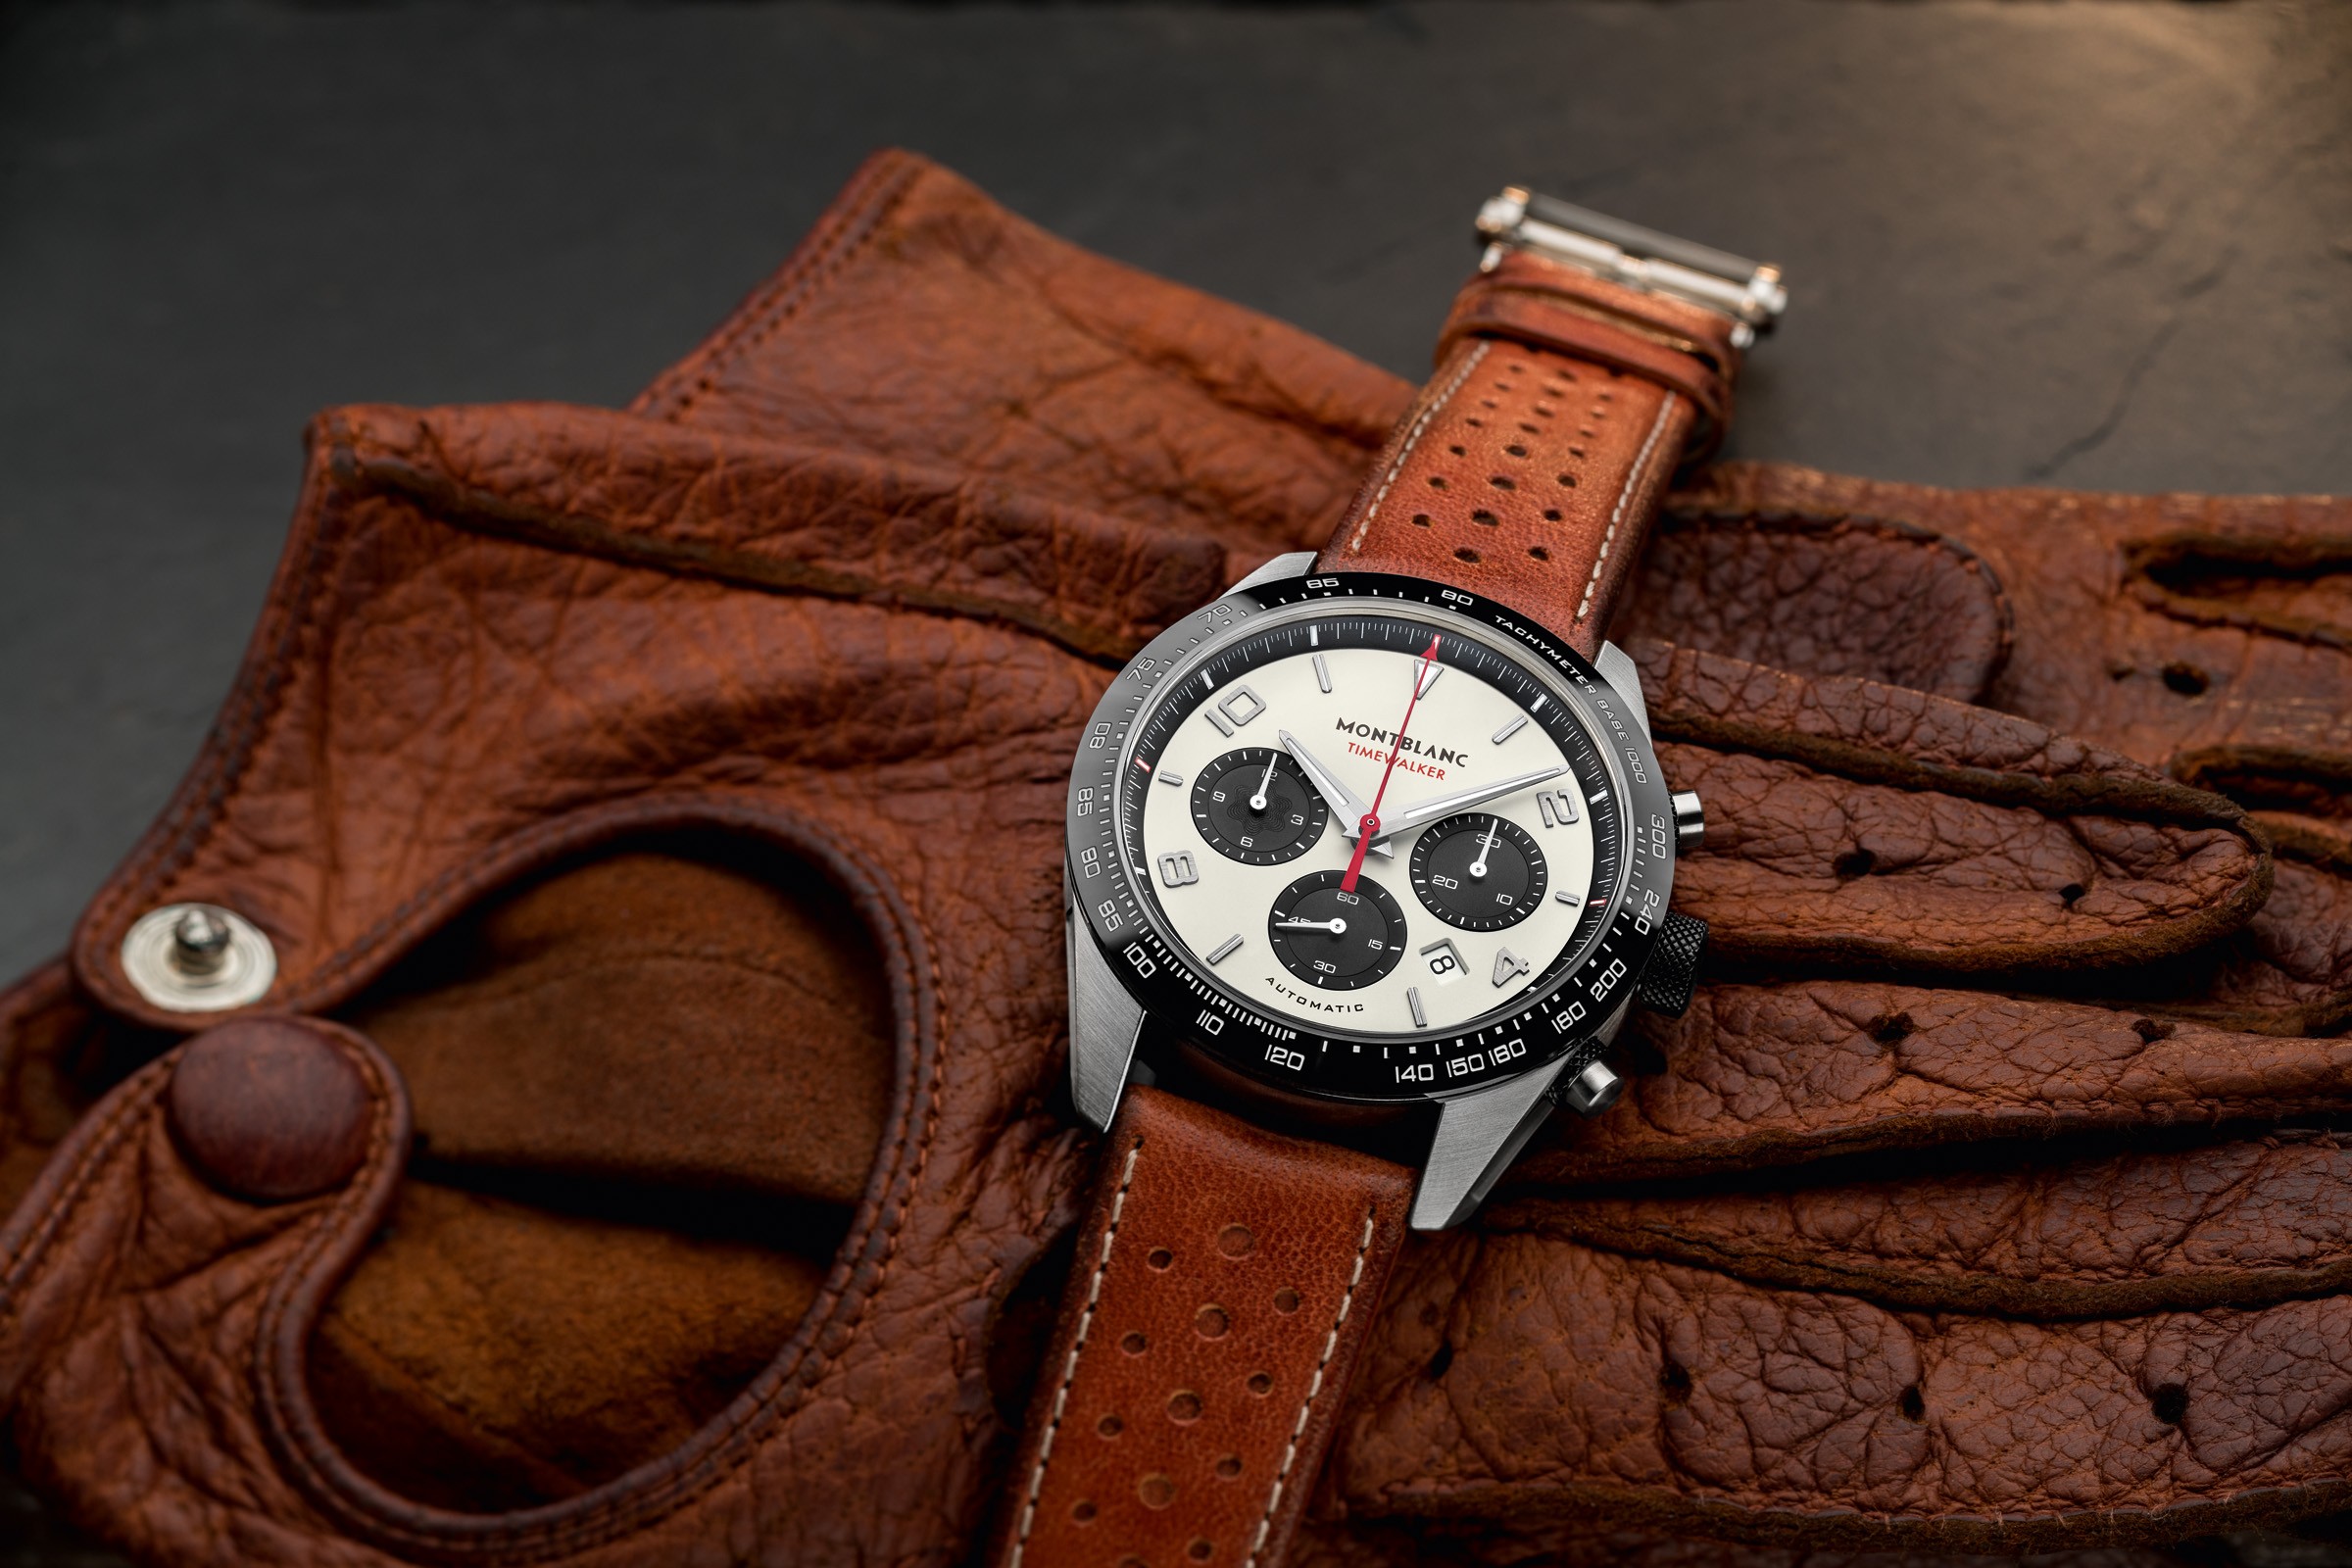 Montblanc’s TimeWalker Manufacture Chronograph features a classic panda design.